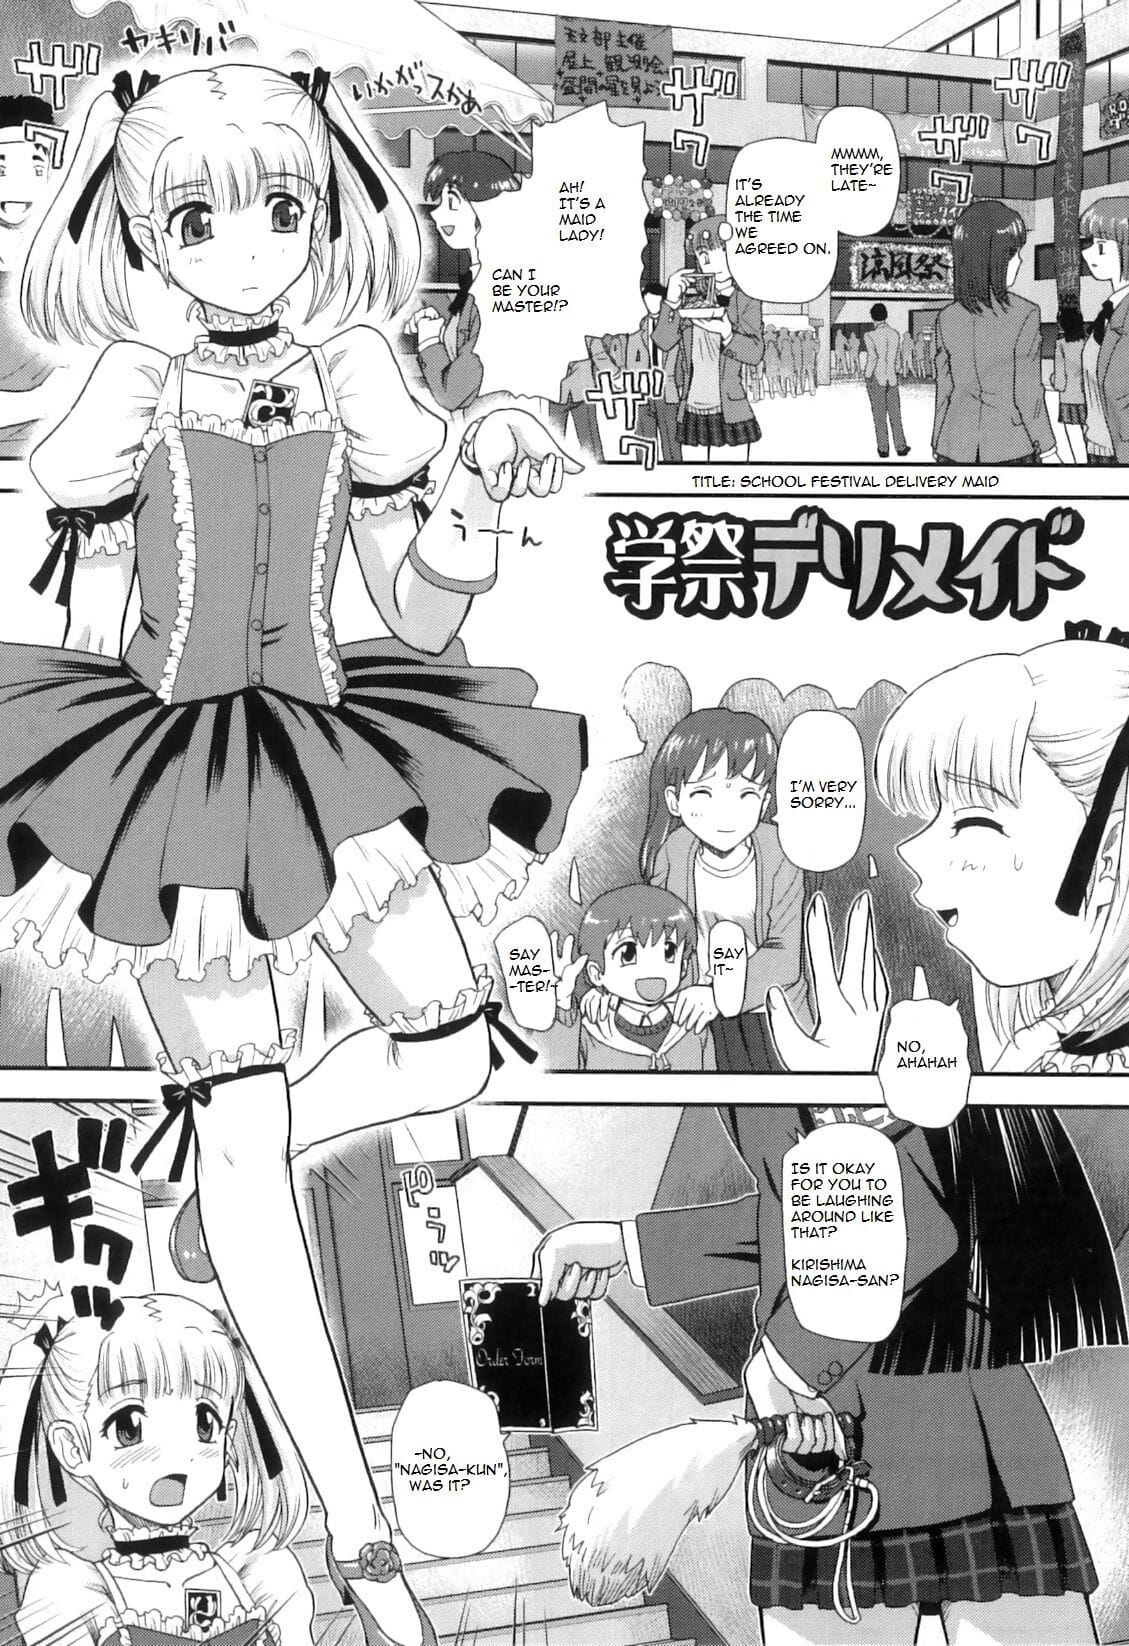 Gakusei DeliMaid - School Festival Delivery Maid page 1